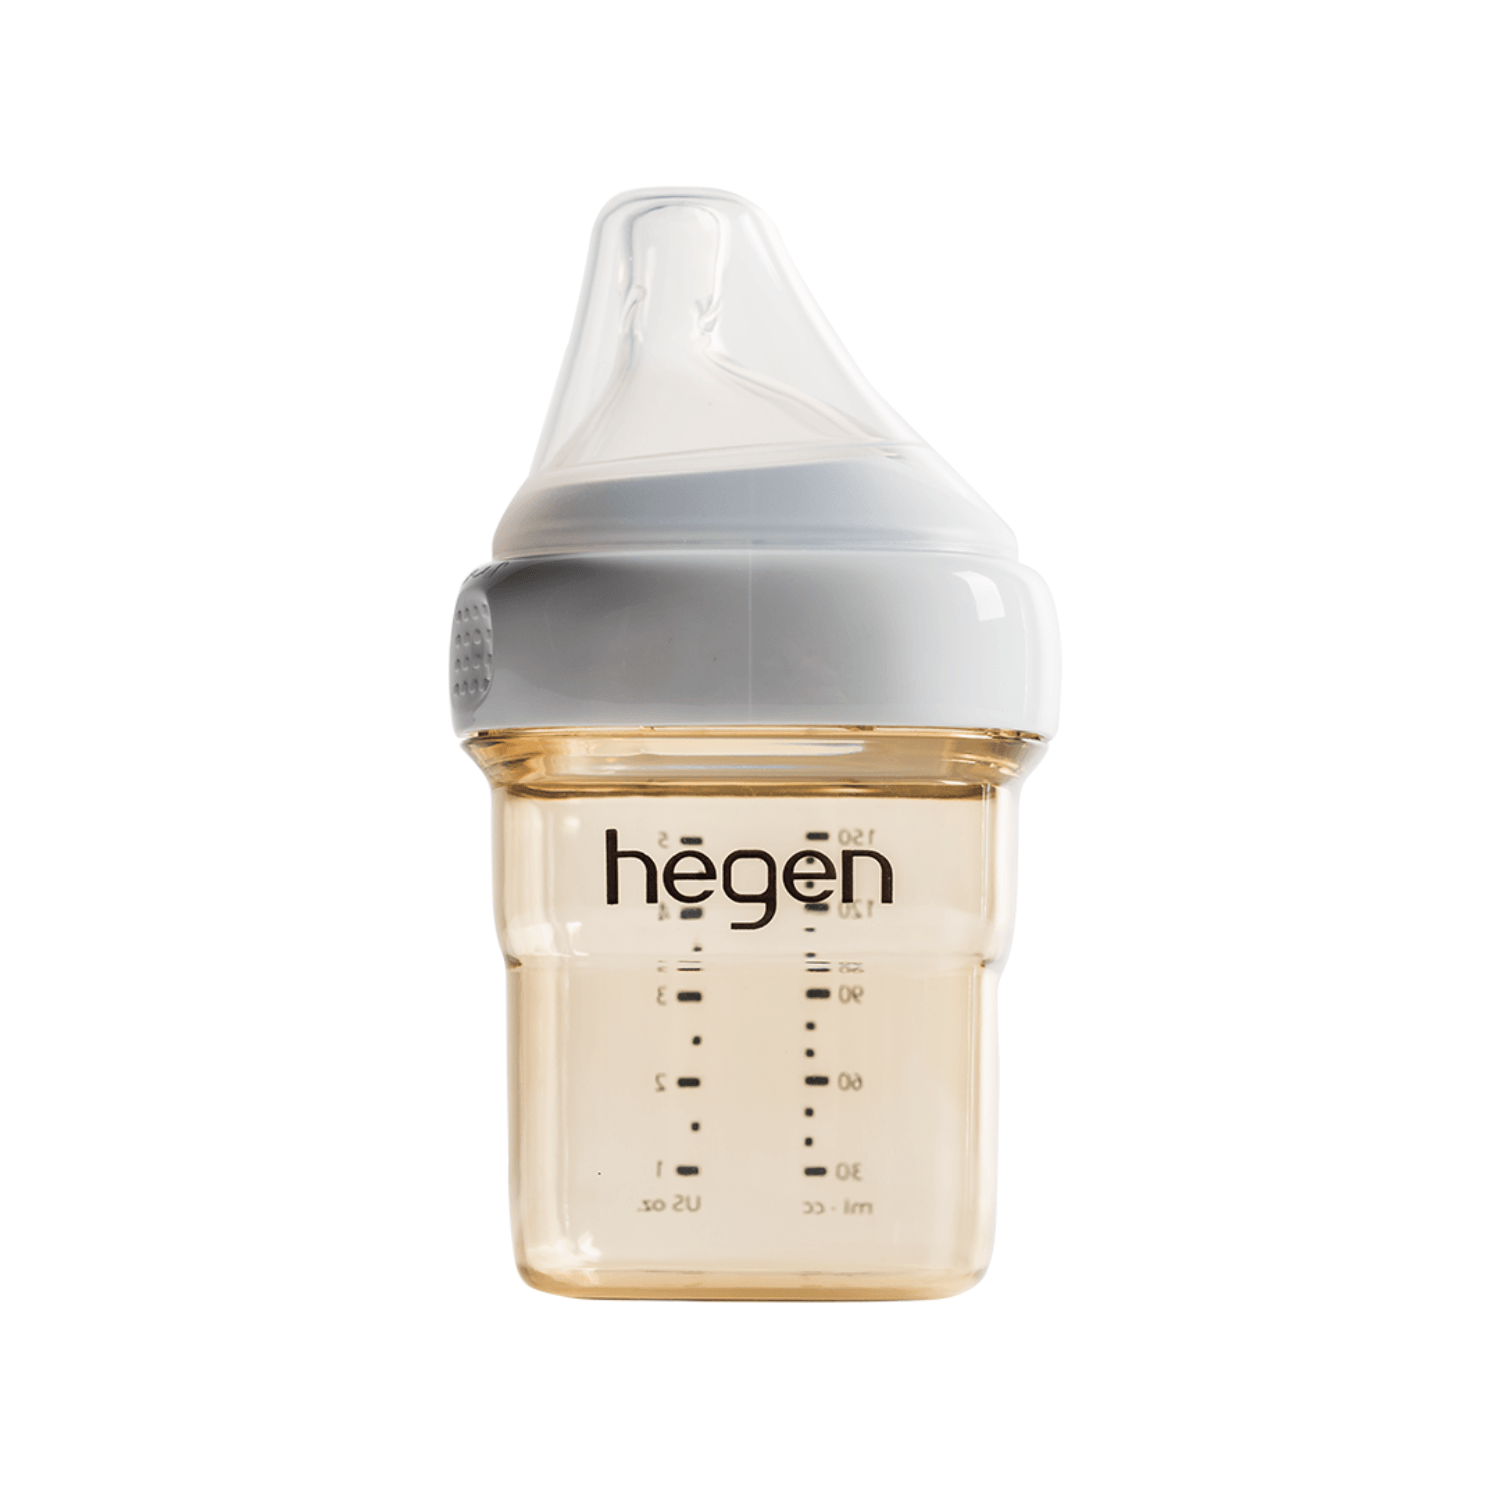 Hegen Express Store Feed Starter Bundle (Breast Pump & Feeding Bottles) Suitable for Newborn - hegen.us